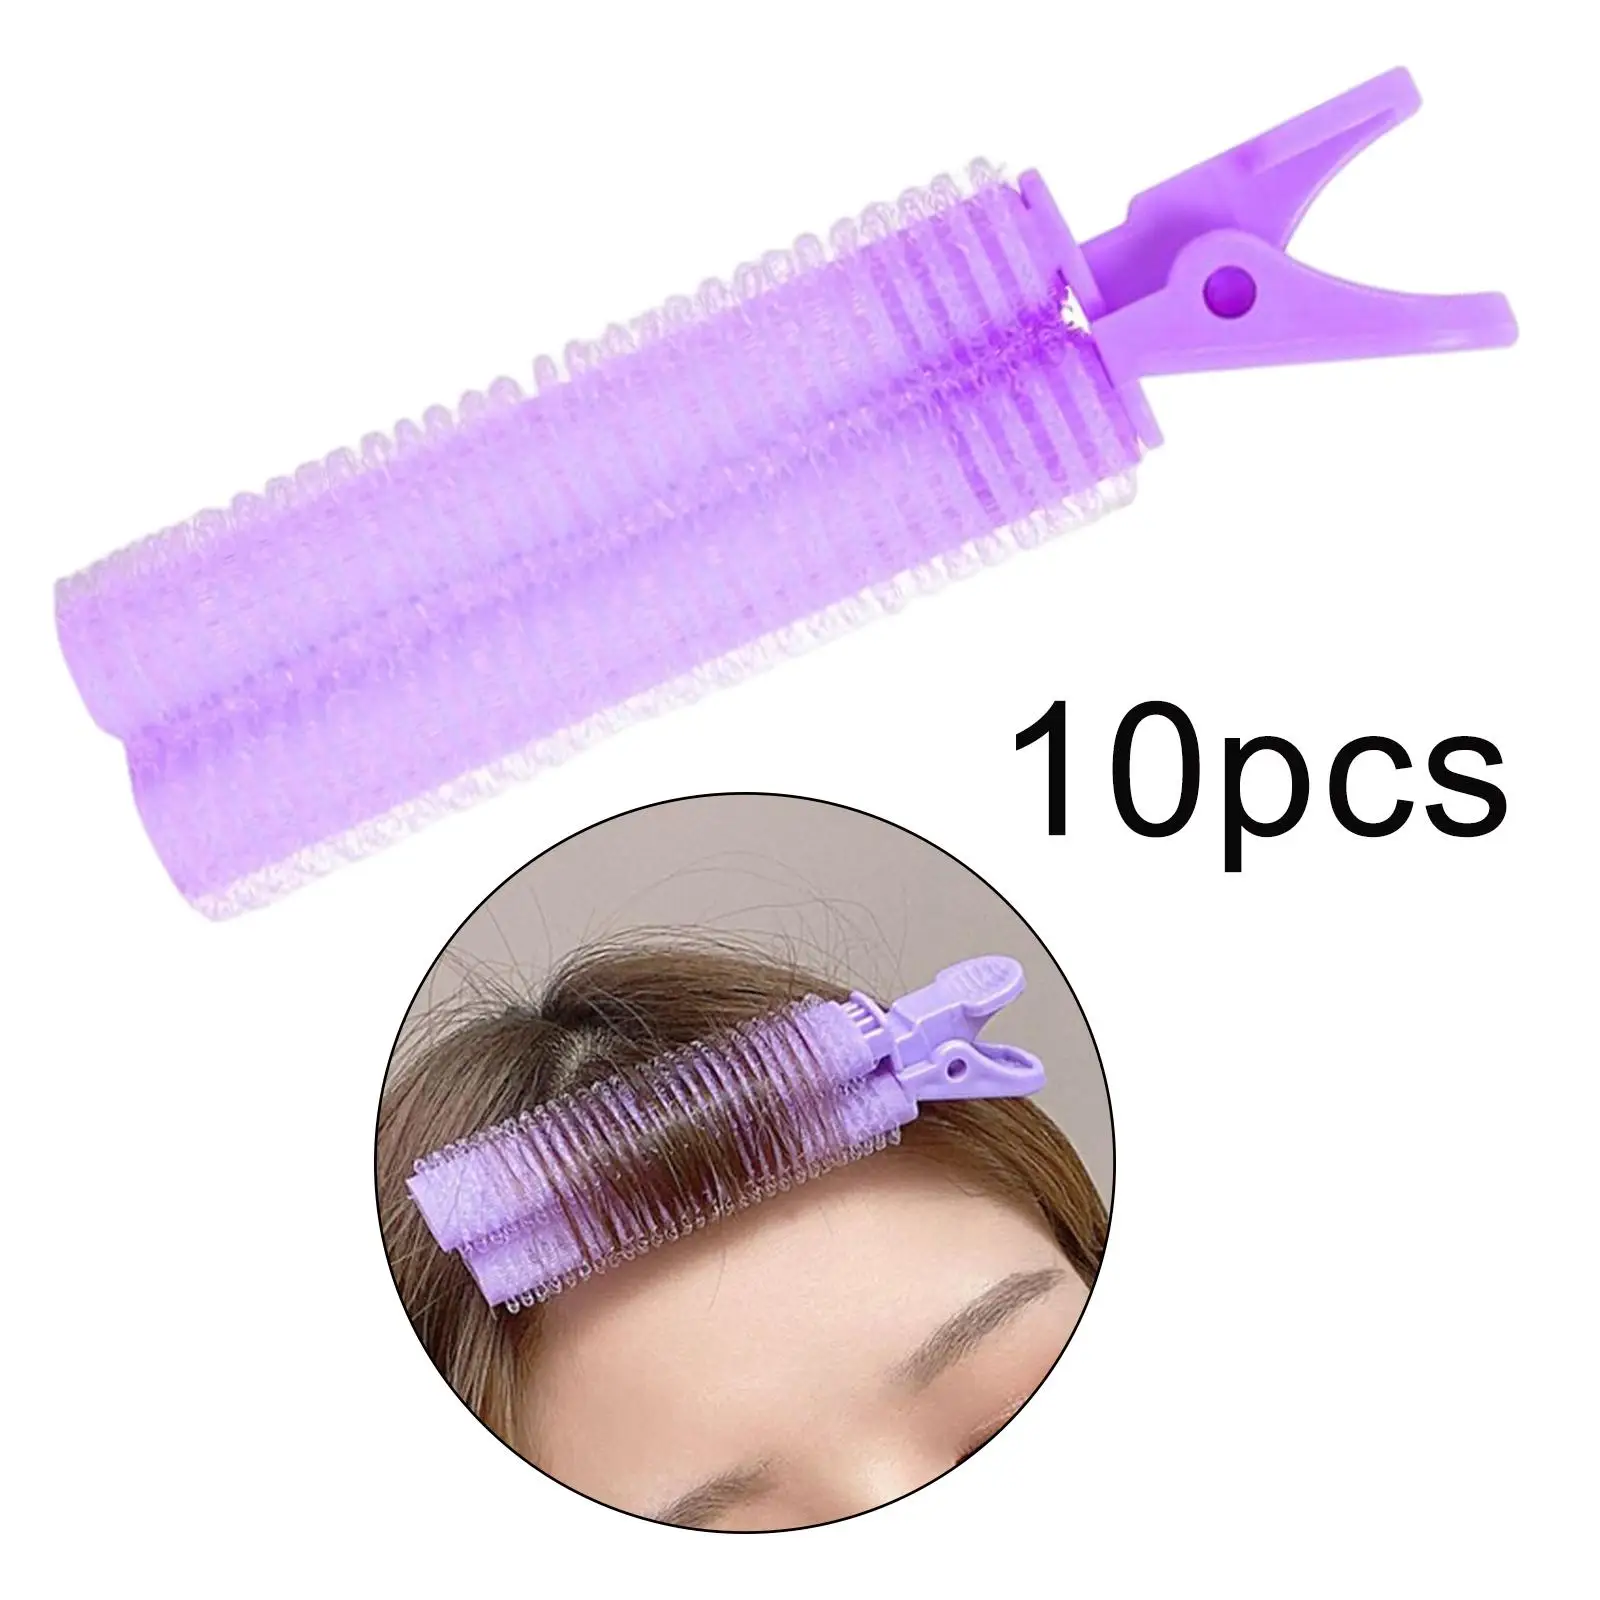 10Pcs Hair Bangs Curling Clips Bangs Effect Hair Top Curler Barrel Washable Portable Reusable Hair Curler for Hair Styling Girls